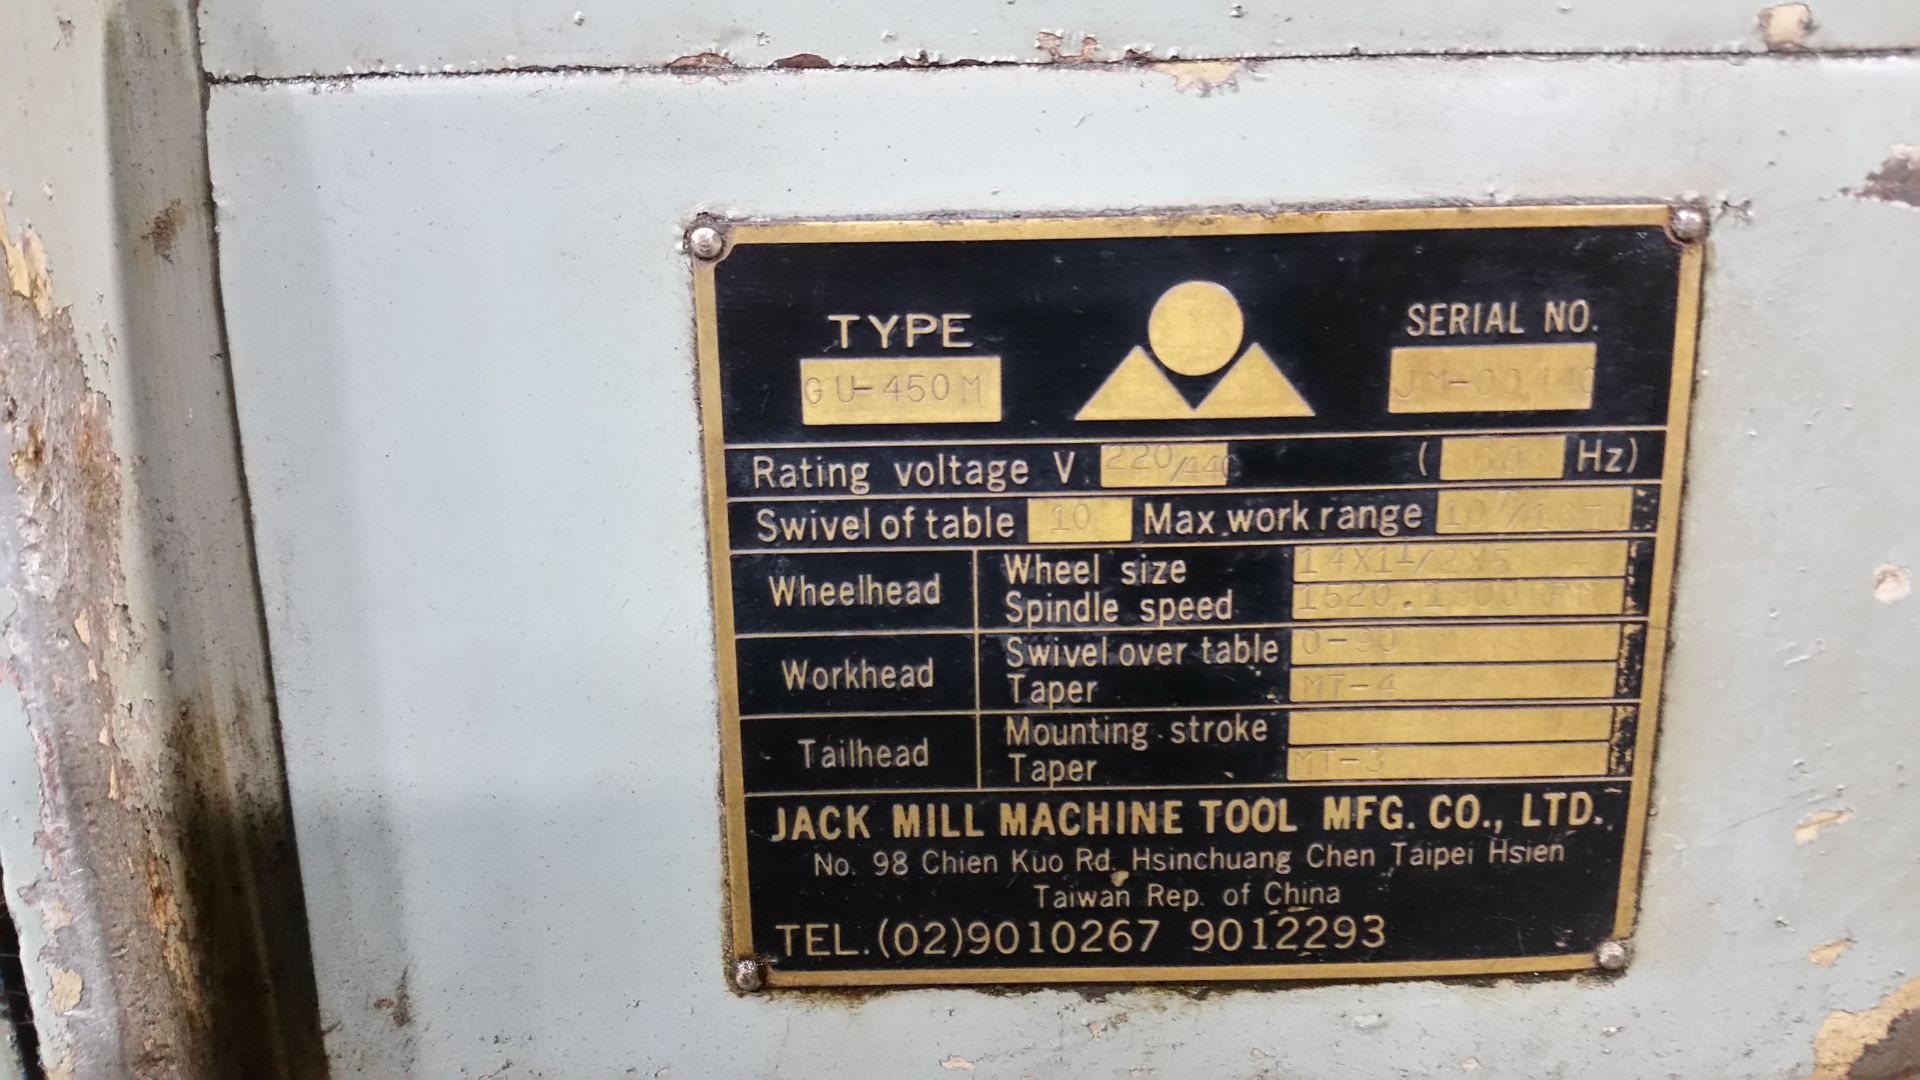 JACK MILL MACHINE TOOL MFG. CO., LTD MODEL GU-450M CYLINDRICAL GRINDER - Image 6 of 7